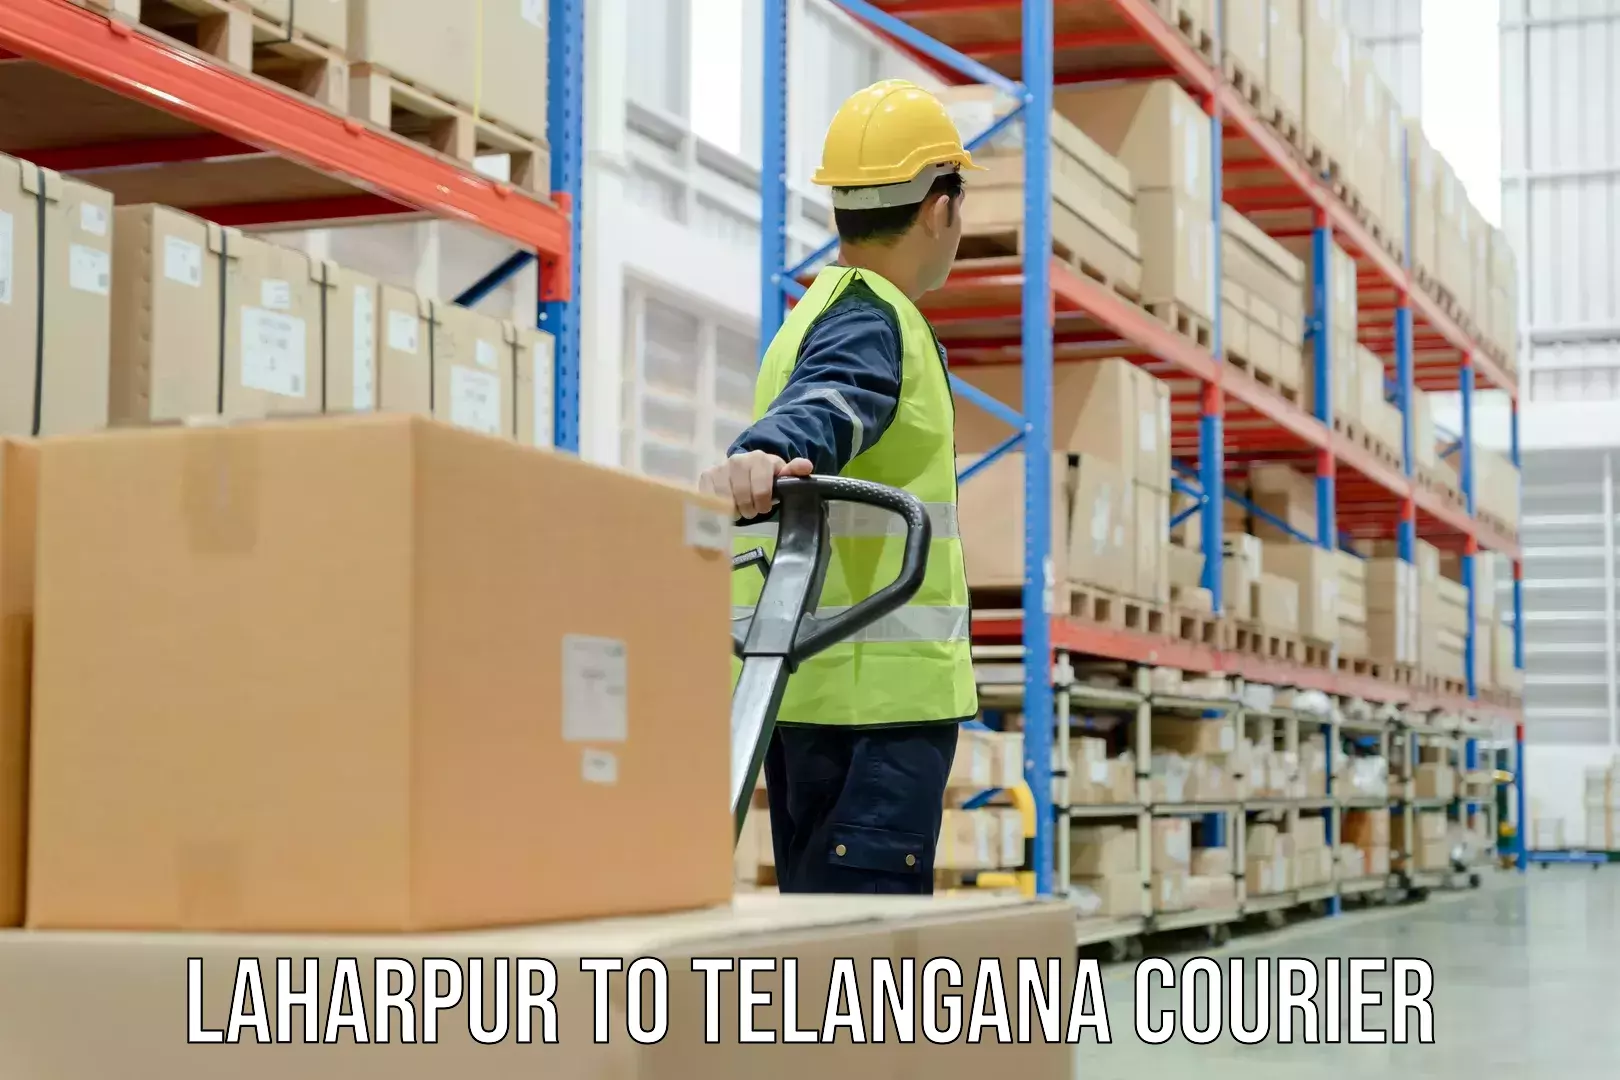 User-friendly delivery service Laharpur to Bejjanki